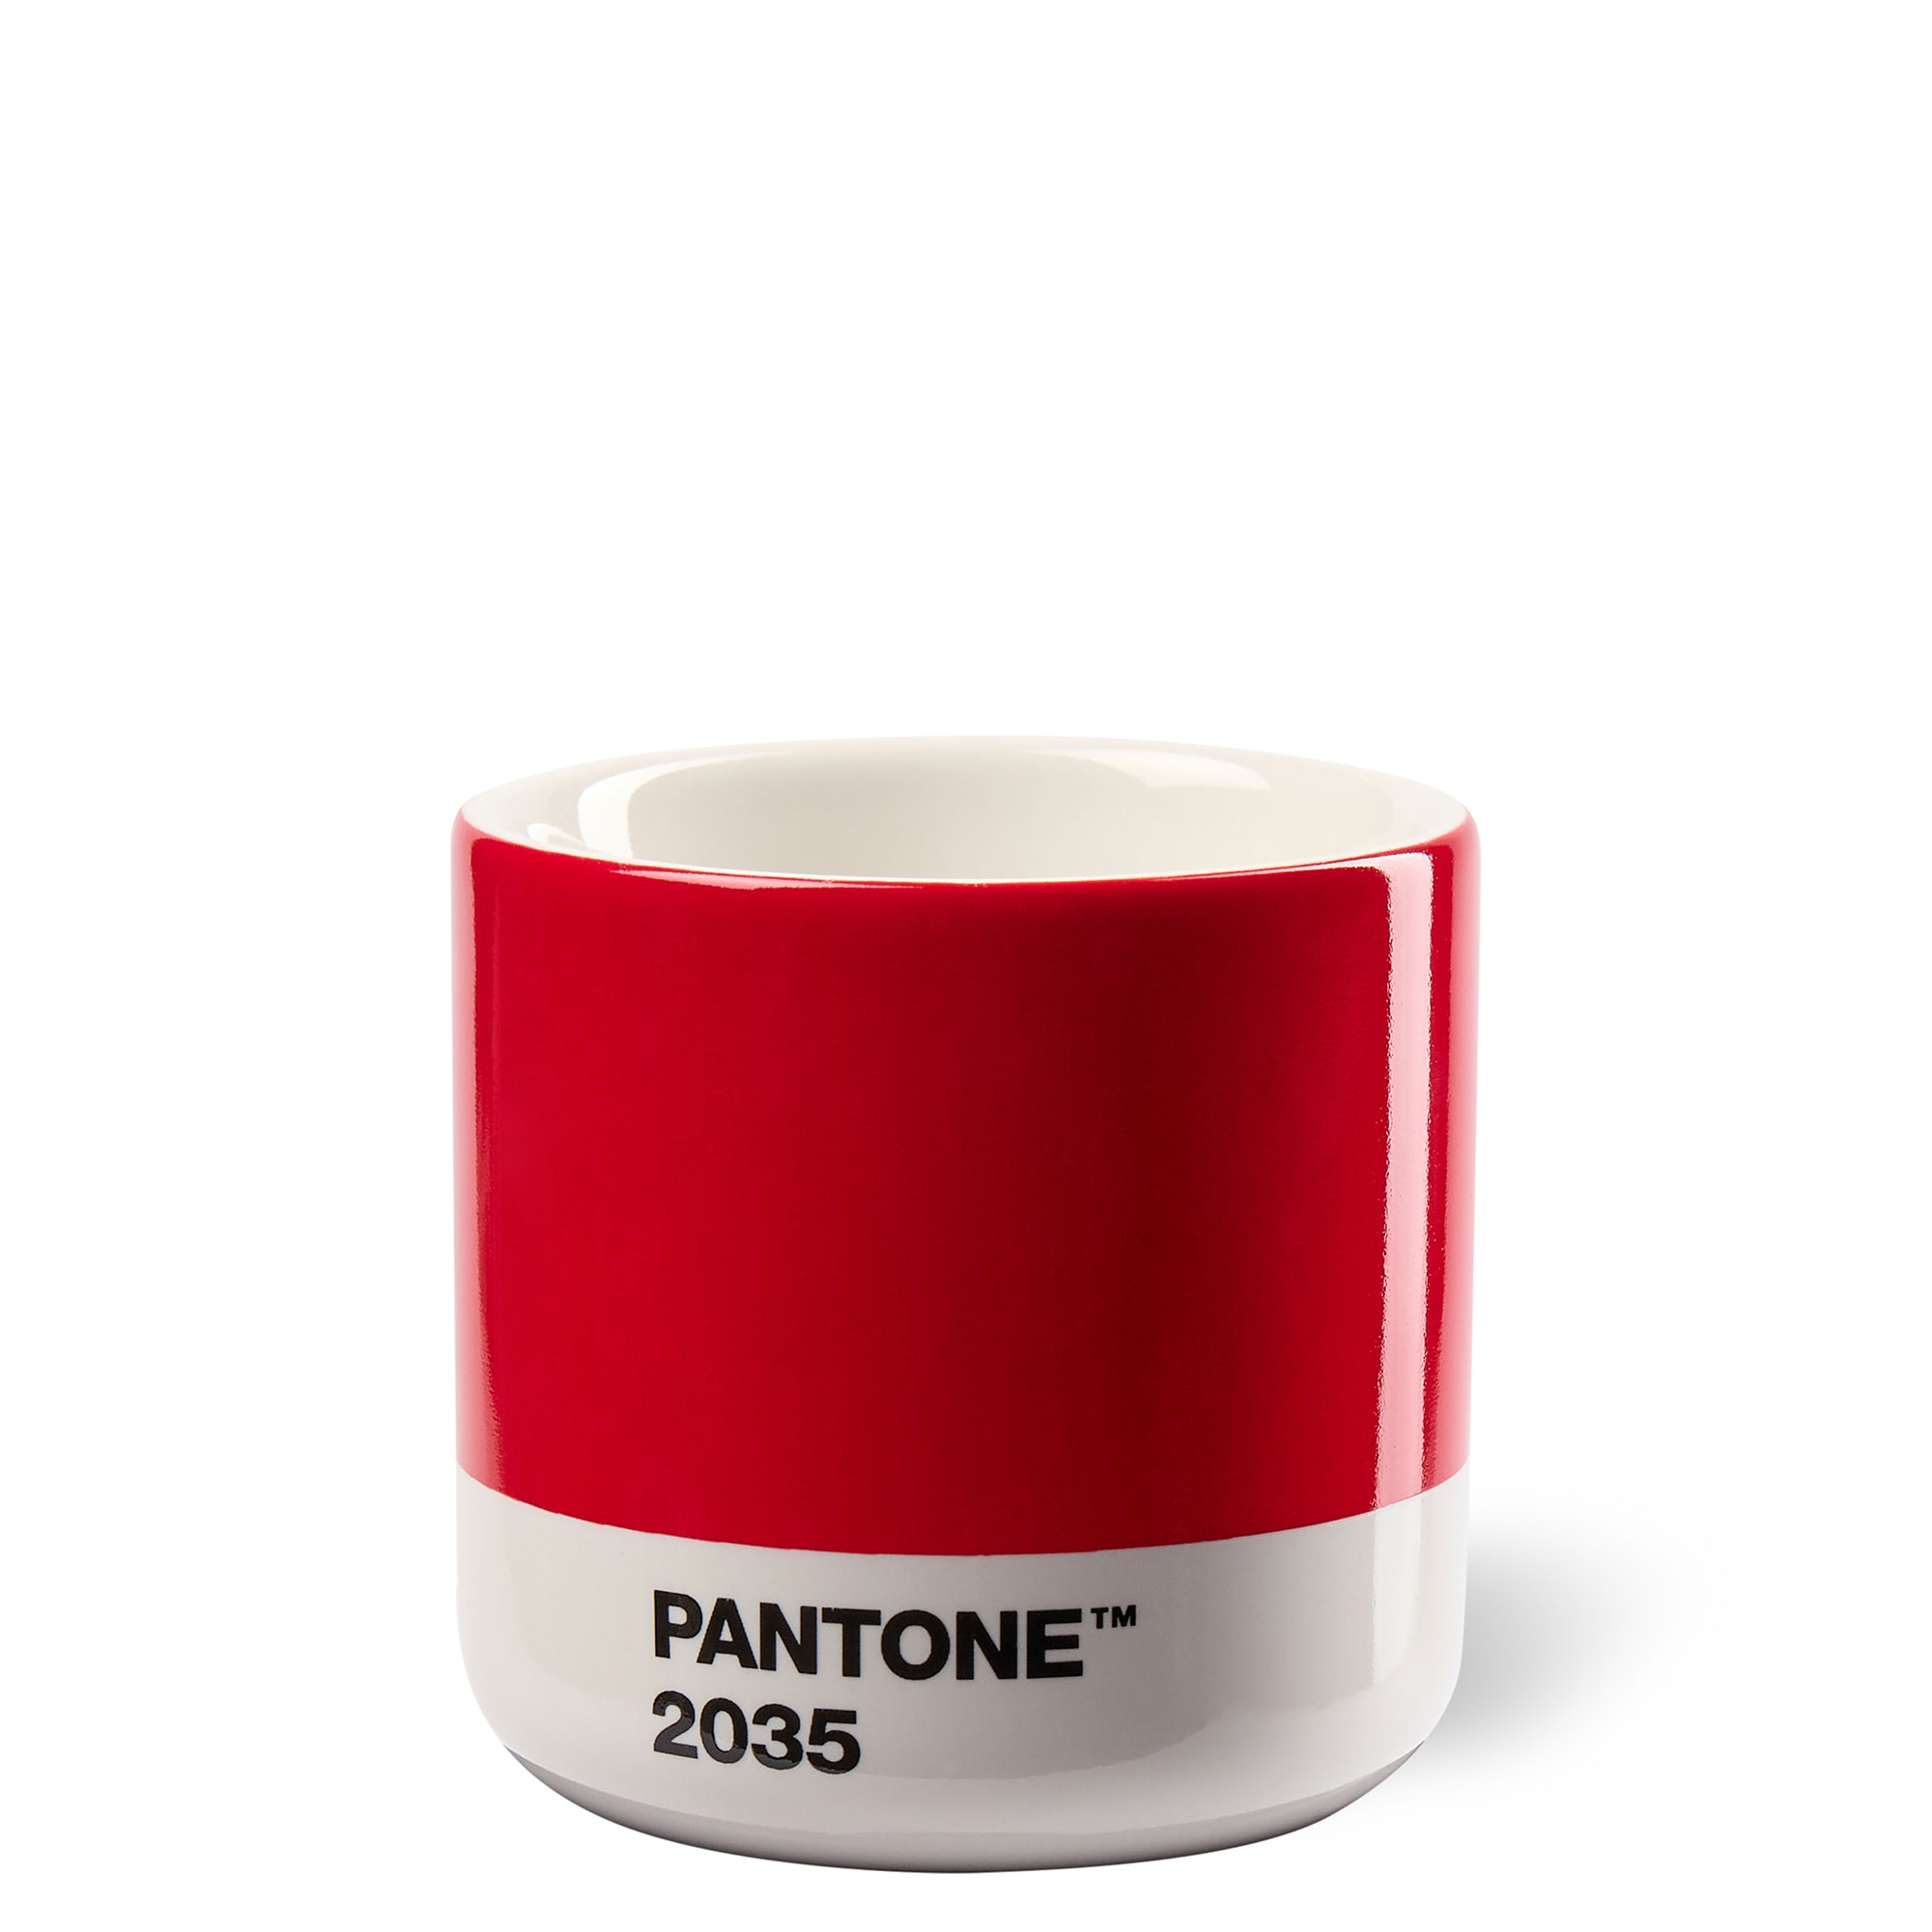 PANTONE Porcelana Macchiato porcelana, 12 C, Red2035 C, Orange 021 C, color rosa claro 182C Juego de 4 vasos térmicos 